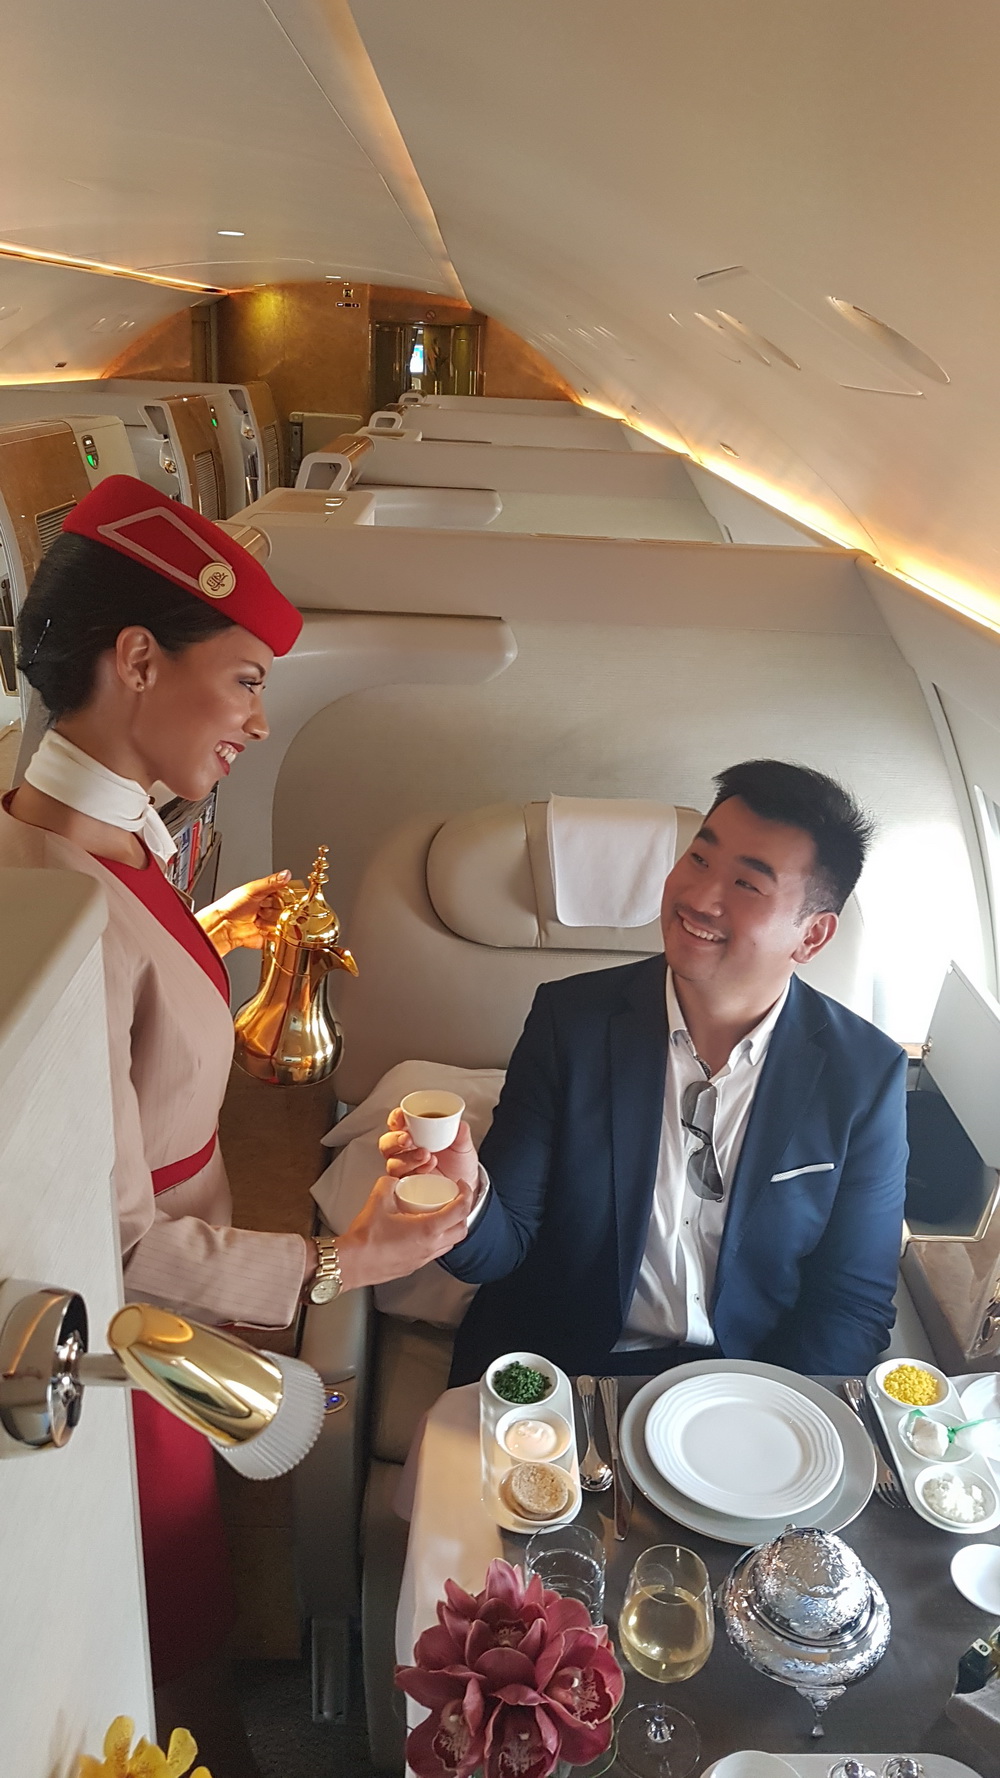 Emirates Executive Private Jet service